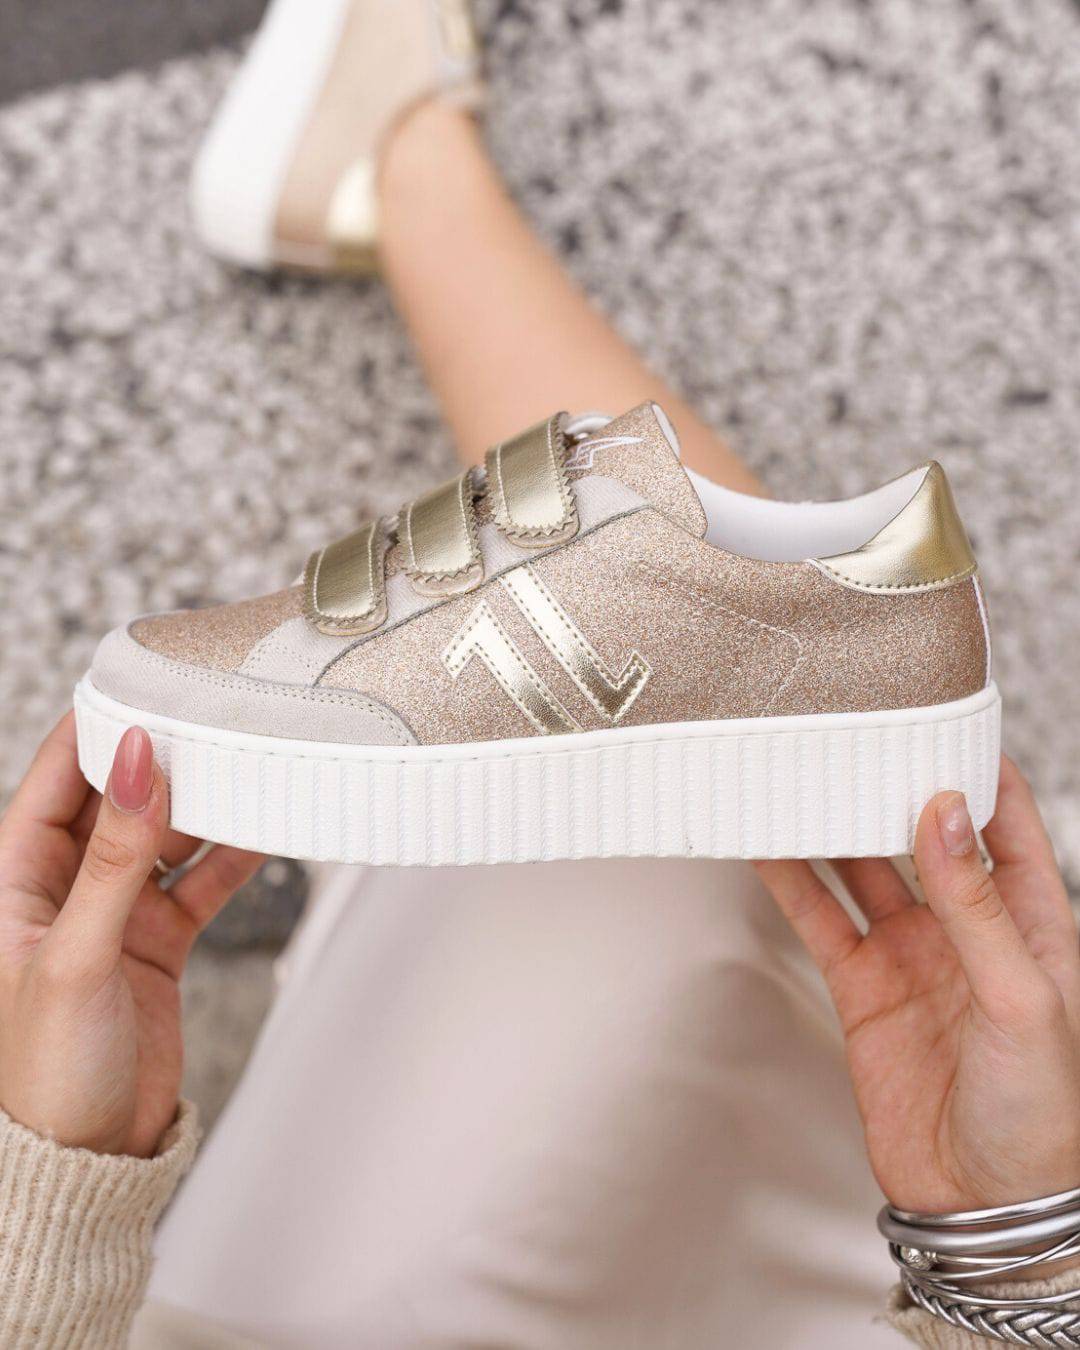 Damen-Sneaker mit Klettverschluss in Gold und Creepers-Sohle - CL73 GLITTER - Casualmode.de